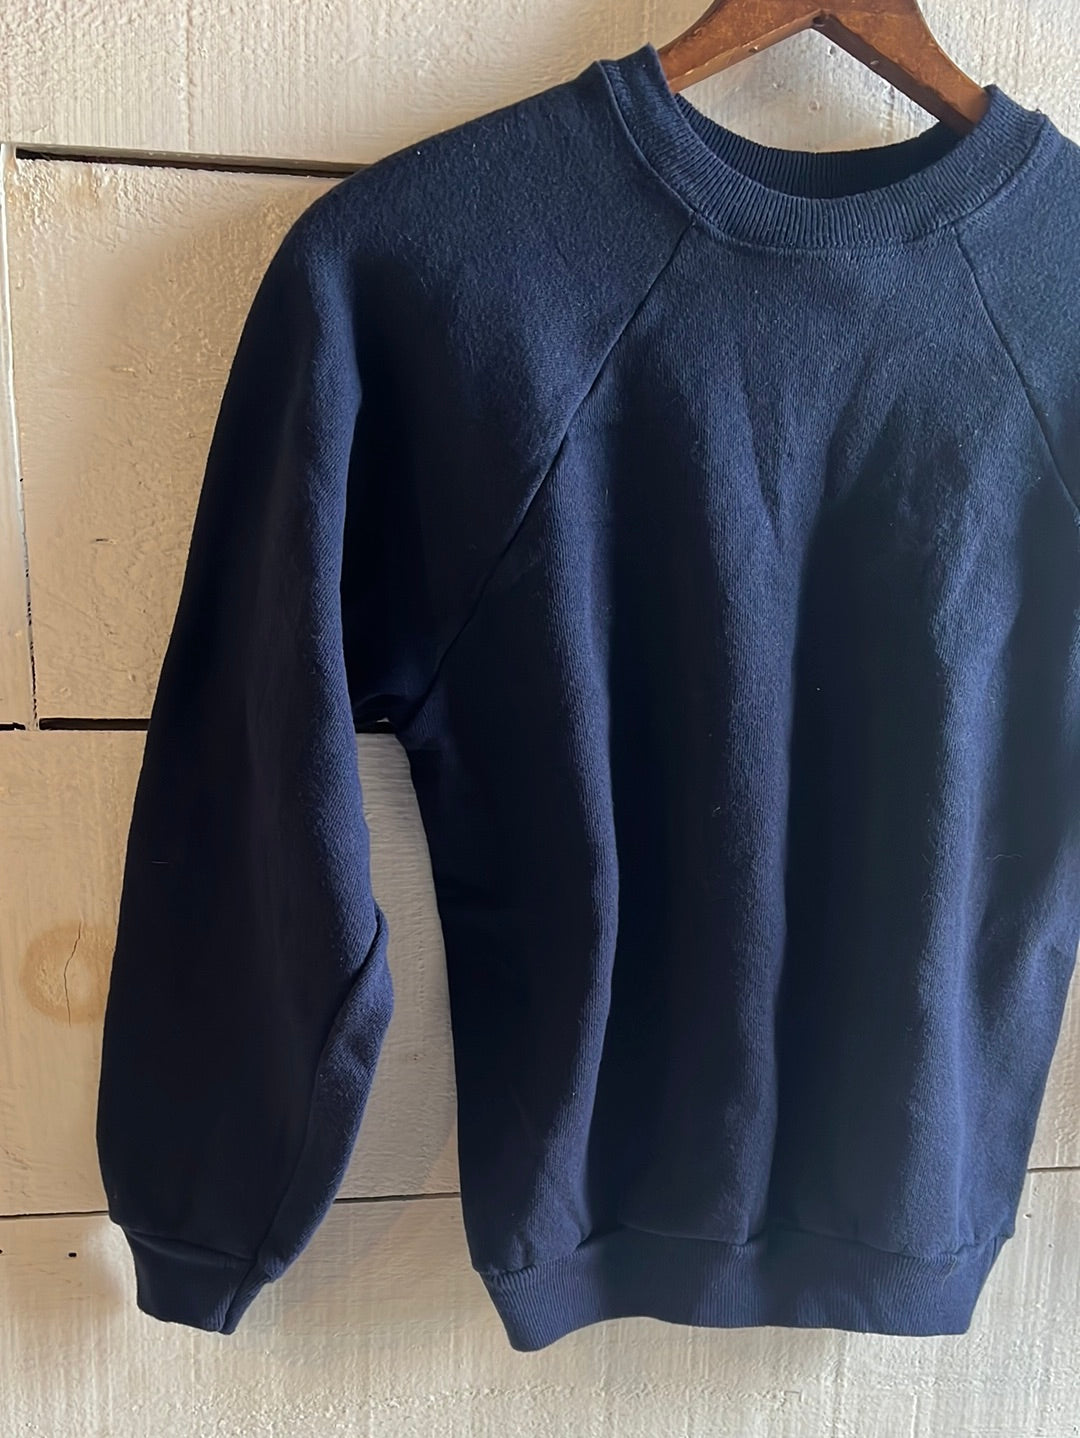 Vintage Raglan Sweatshirt - Navy Blue